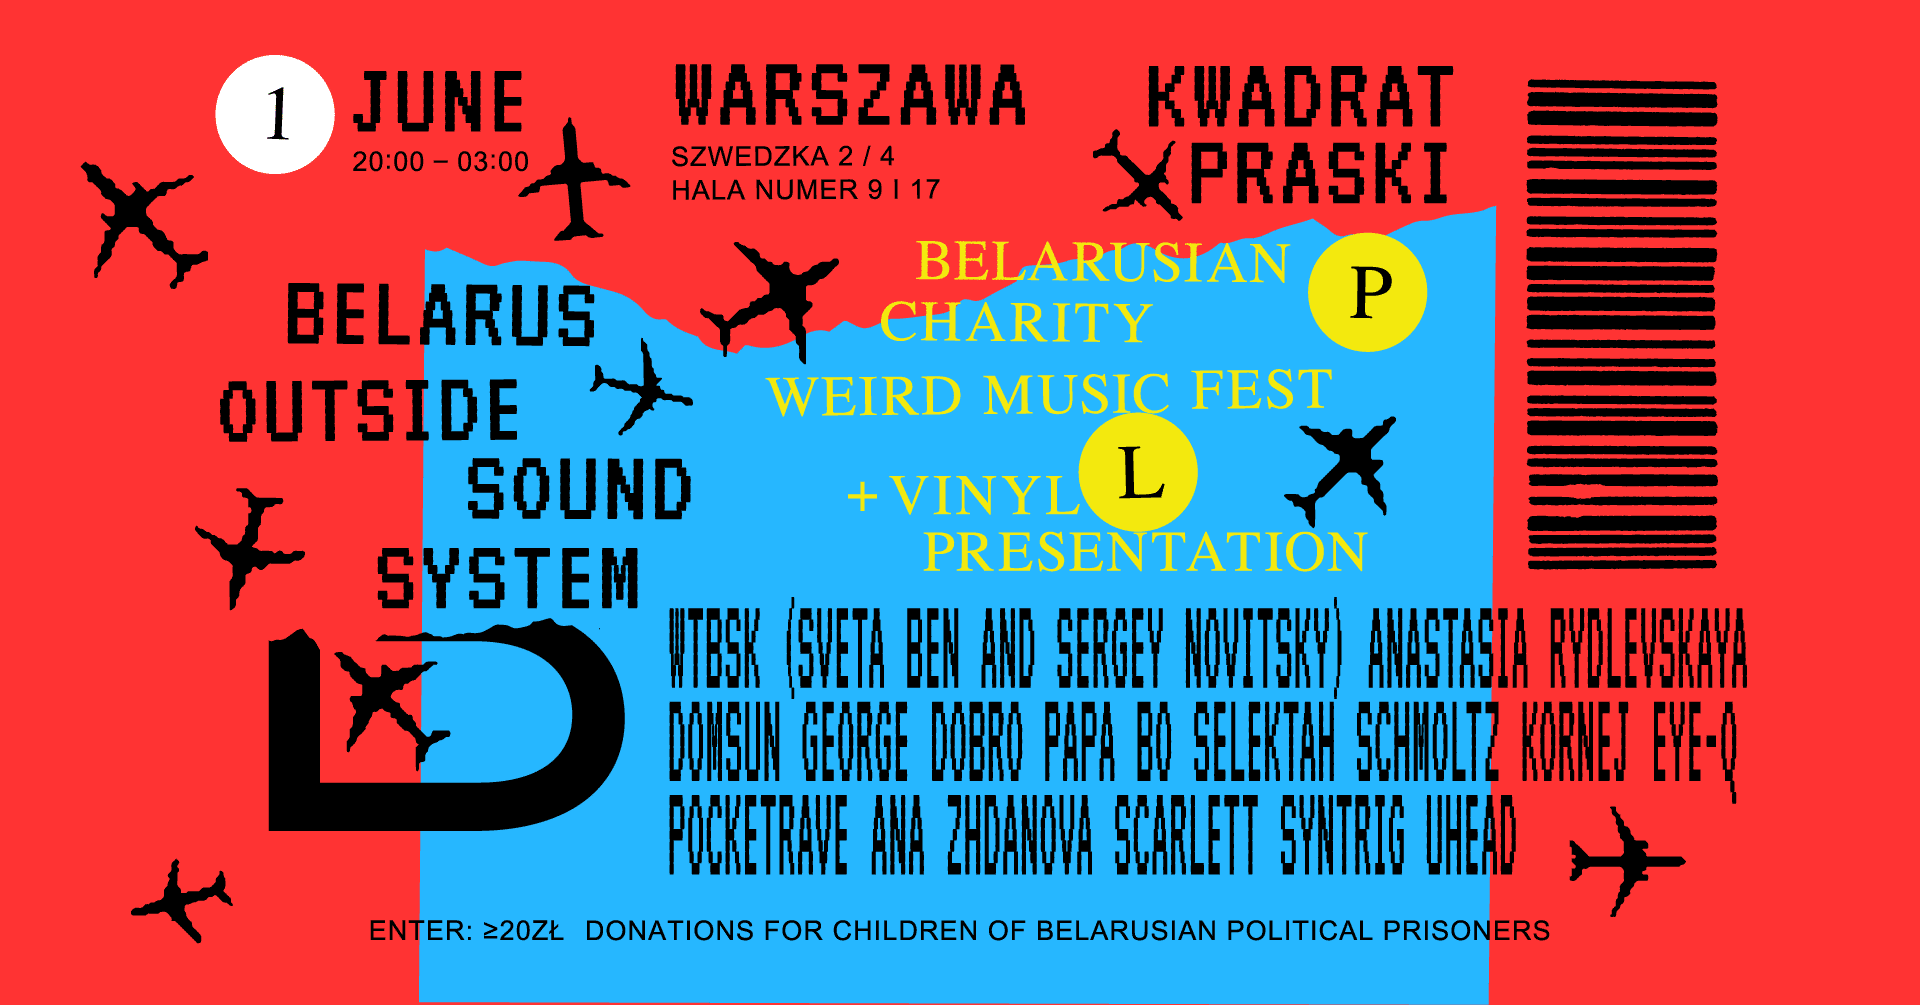 BELARUS OUTSIDE SOUND SYSTEM - Belarusian charity weird music fest + VINYL presentation - フライヤー裏